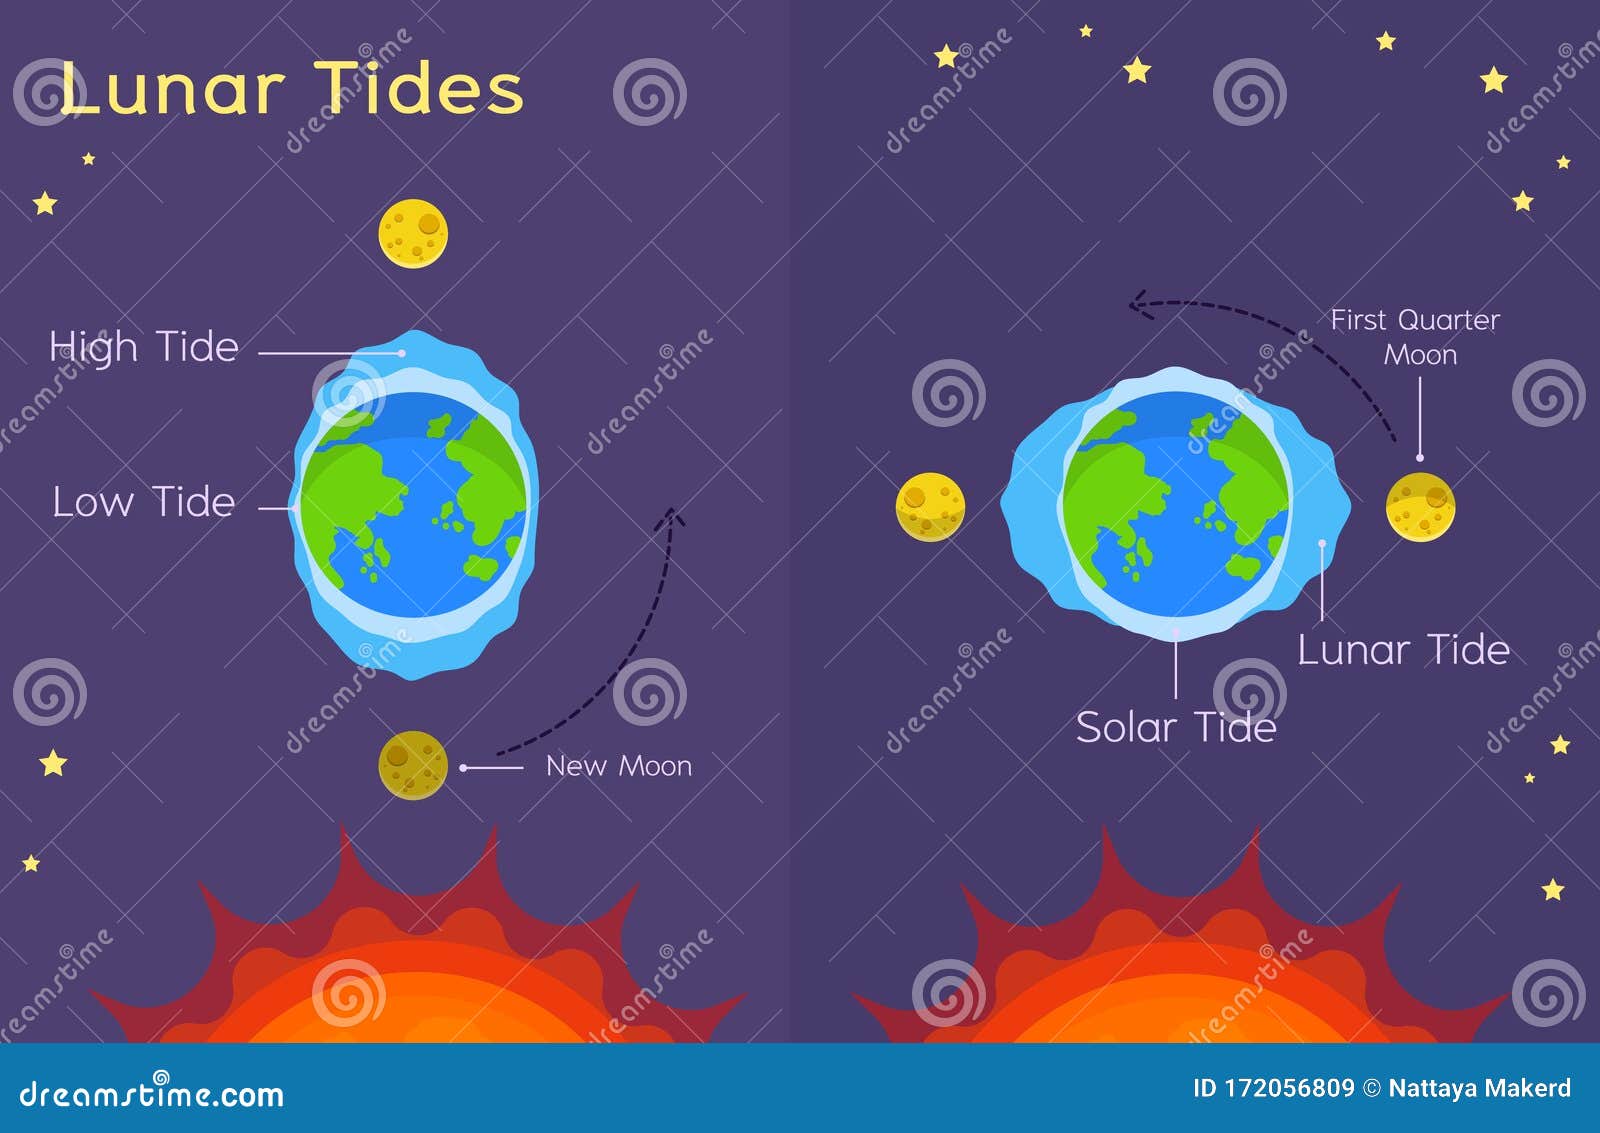 lunar tides - astronomy for kids solar eclipses